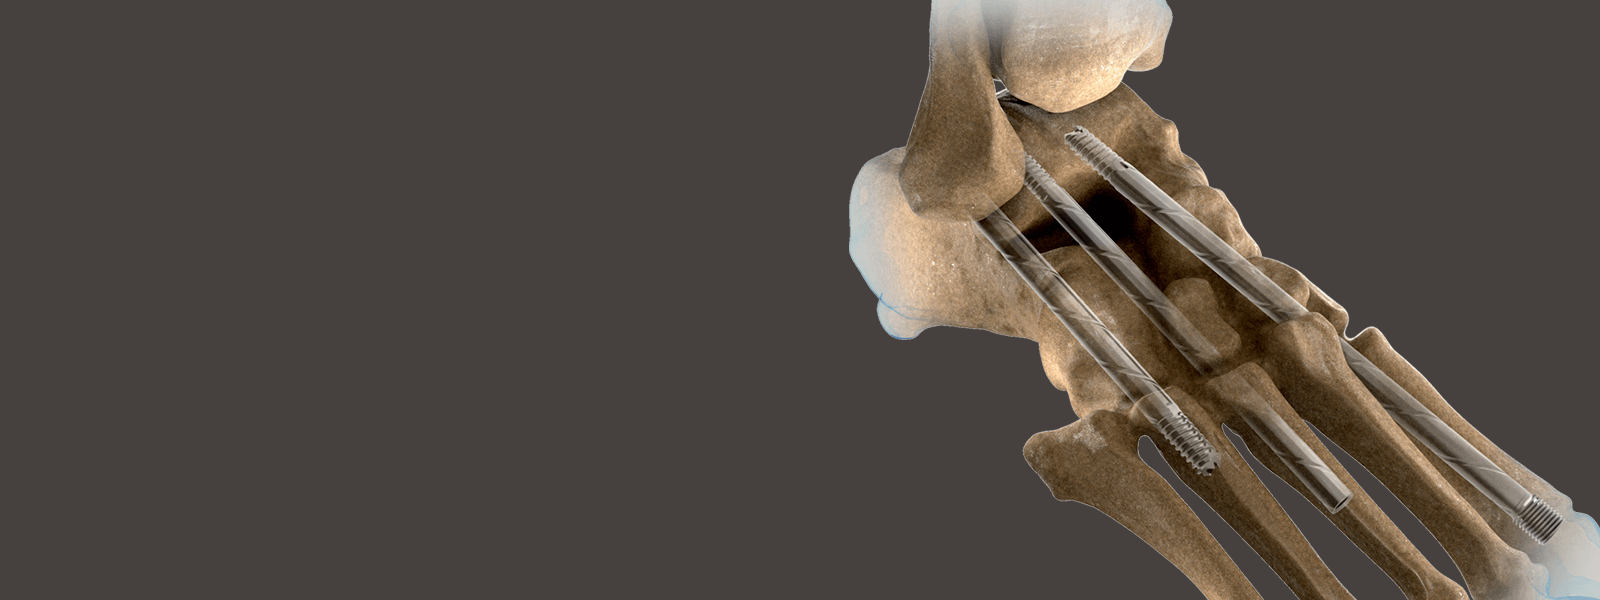 3D rendering of screws inside of a foot's bone structure